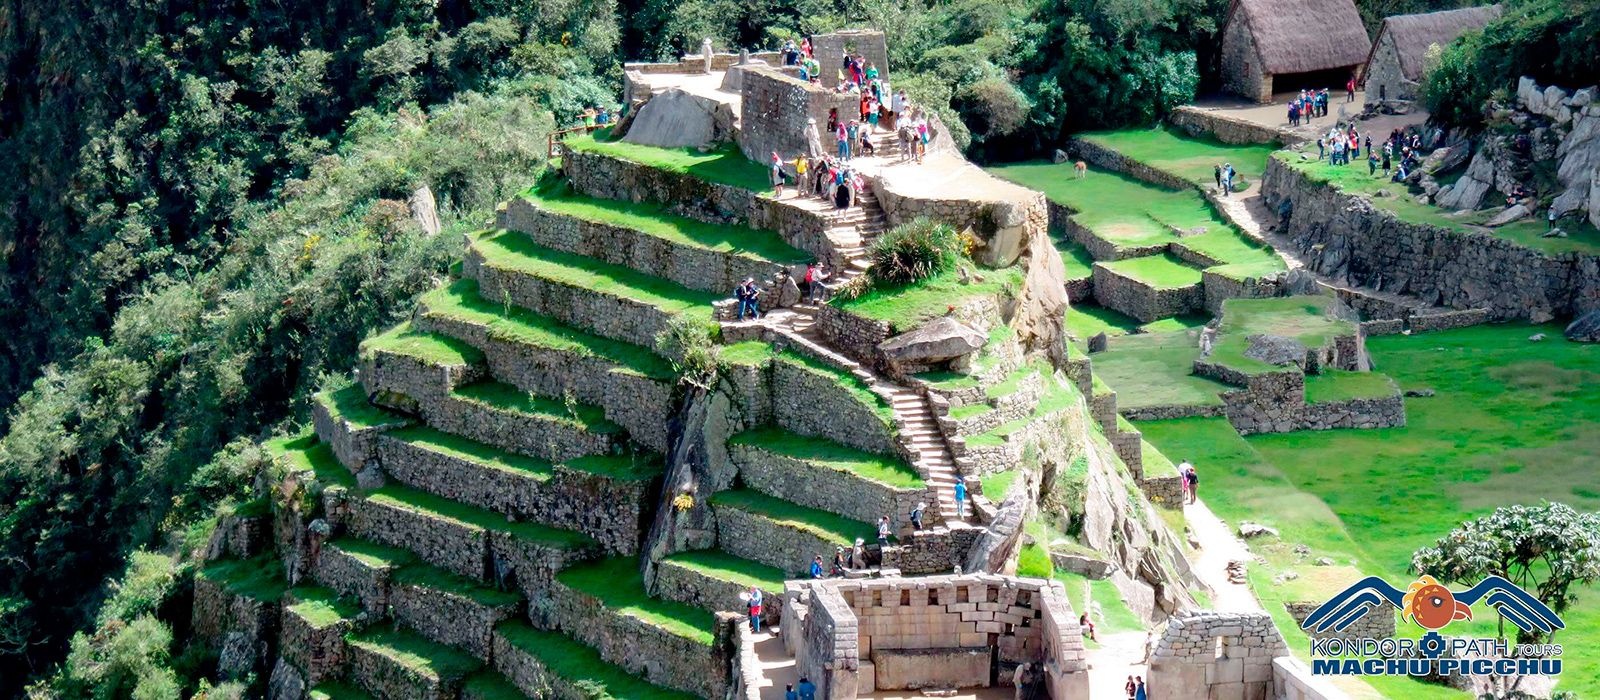 Machu Picchu guided tour by train